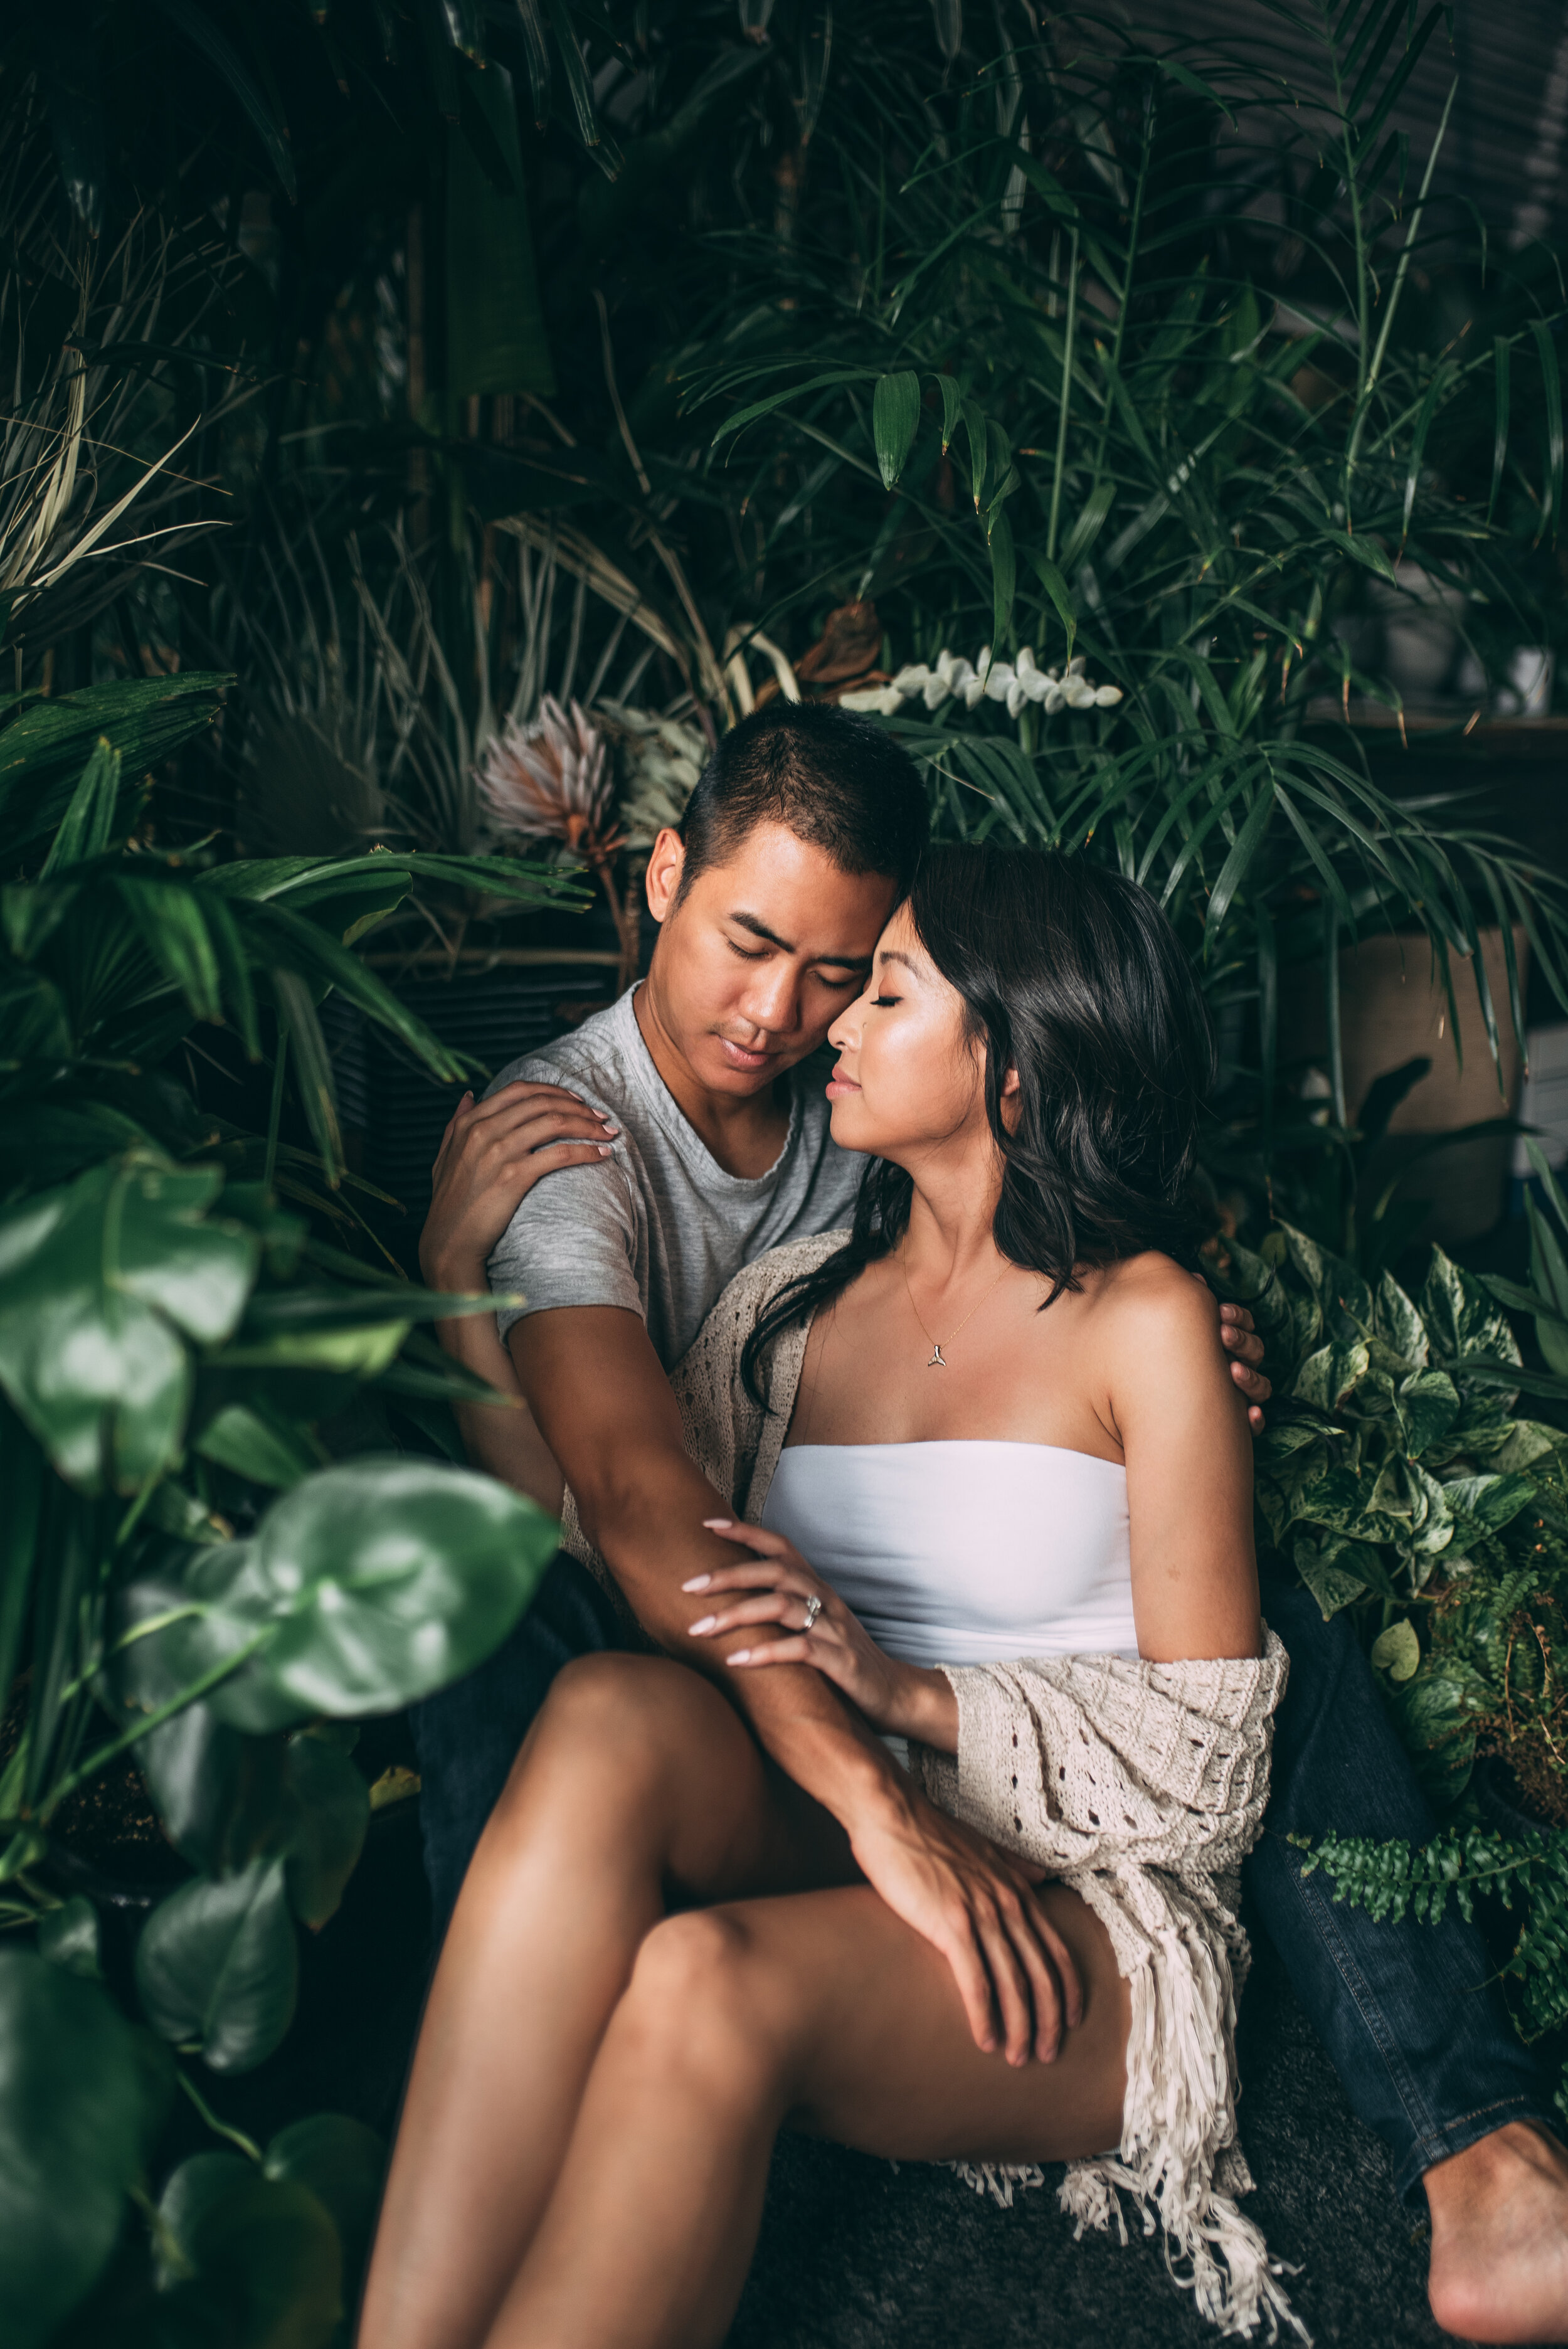 Sarah & Aaron Loft Garden Oasis - August 12, 2019 - Laura Olson Photography--33.jpg